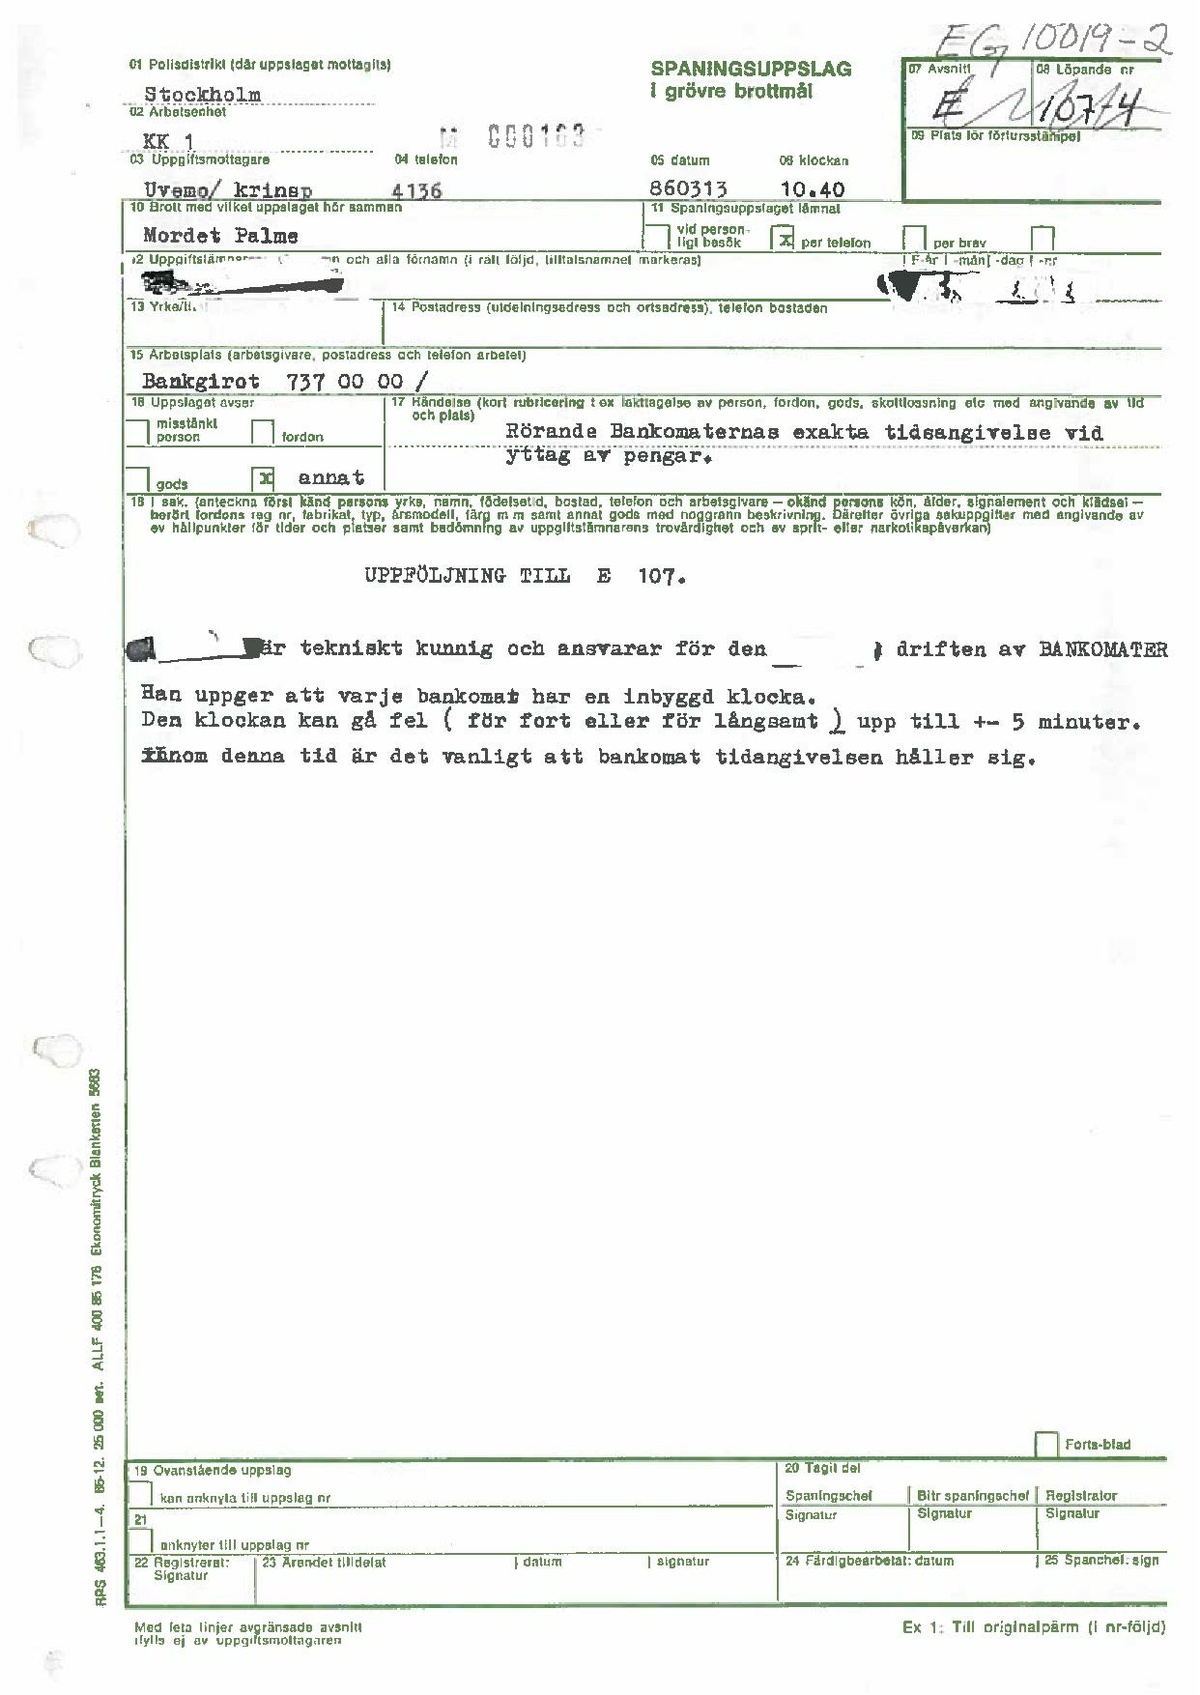 Pol-1986-03-13 EG10019-02 Information om-bankomater.pdf